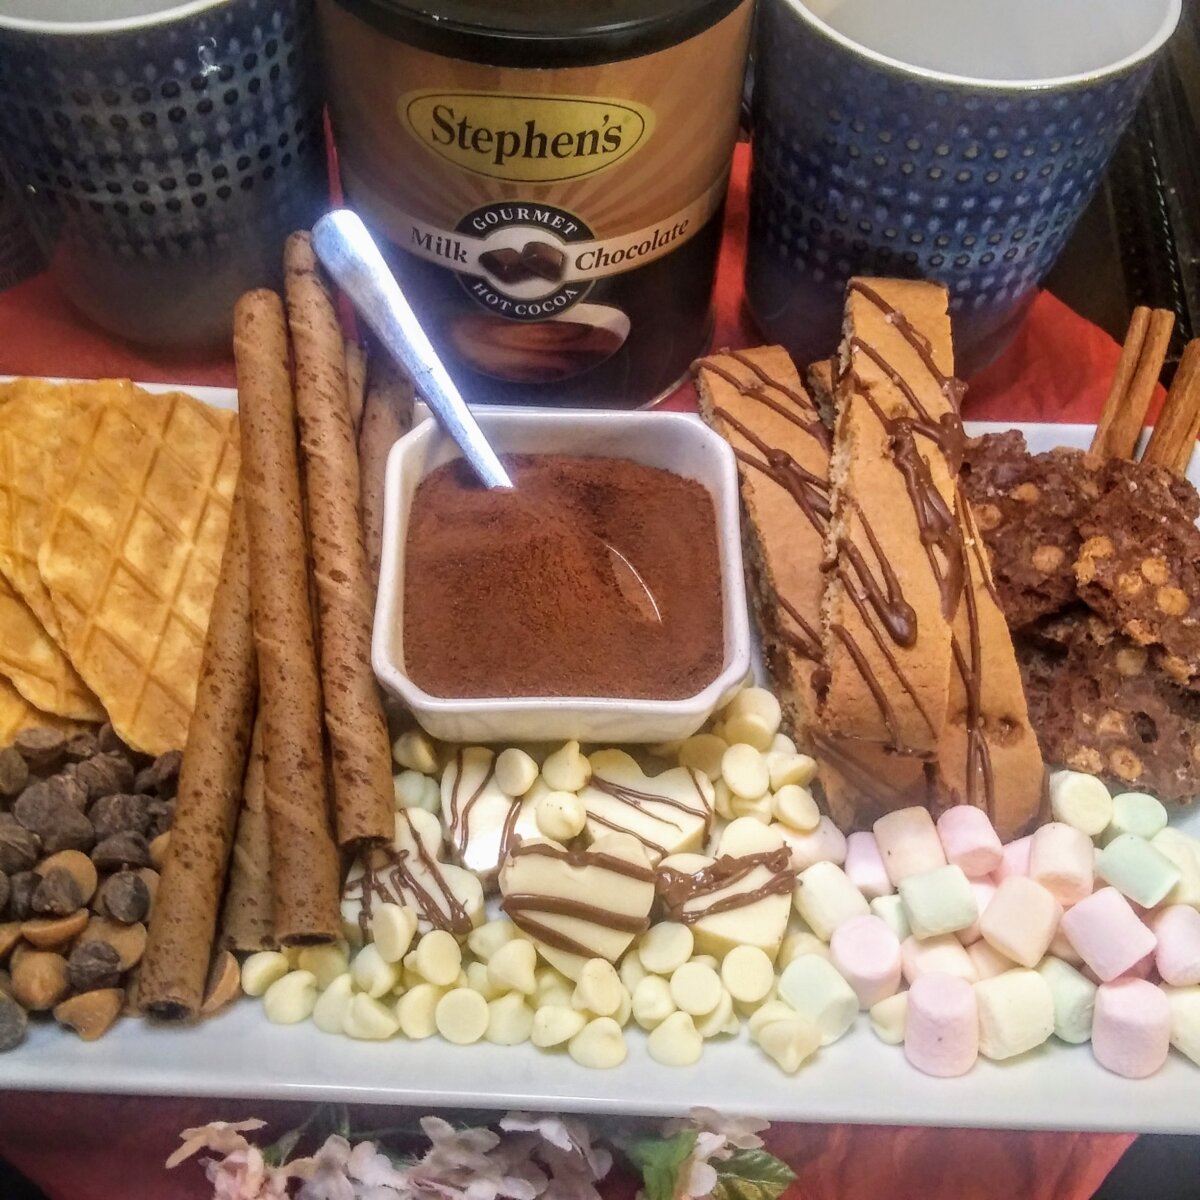 Hot Chocolate Charcuterie Board